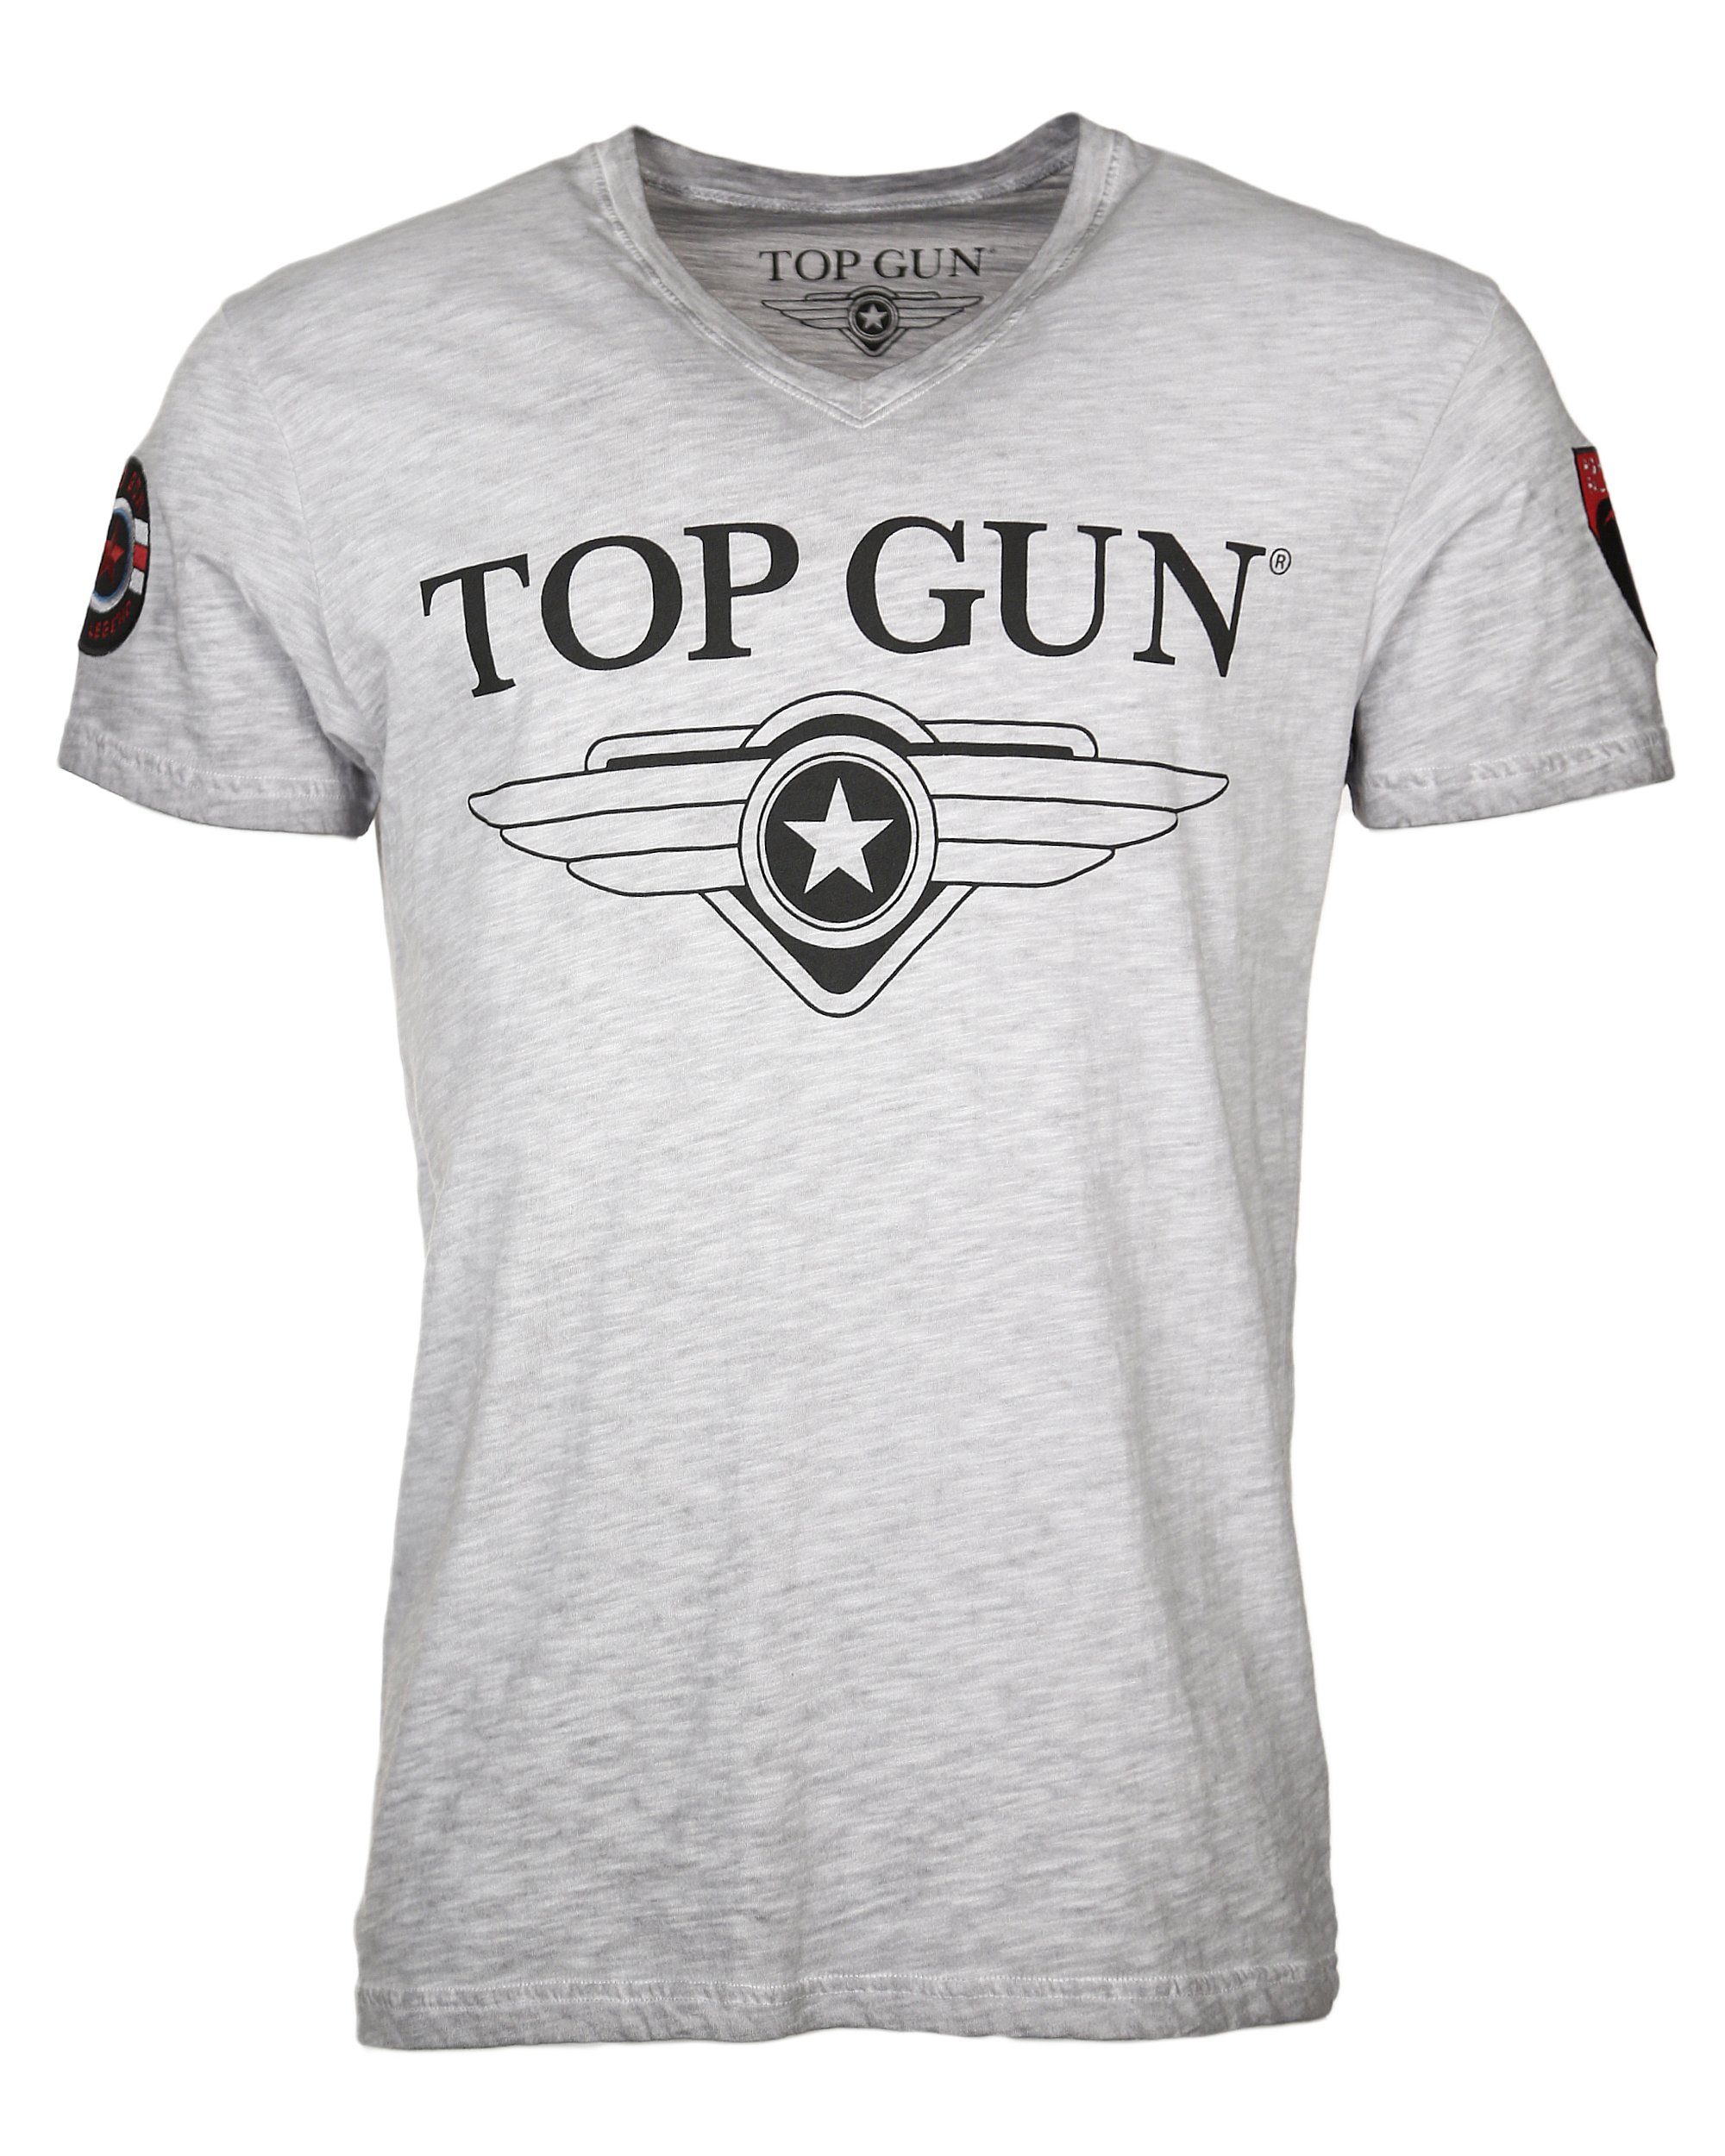 mélange T-Shirt Stormy grey GUN TG20191005 TOP